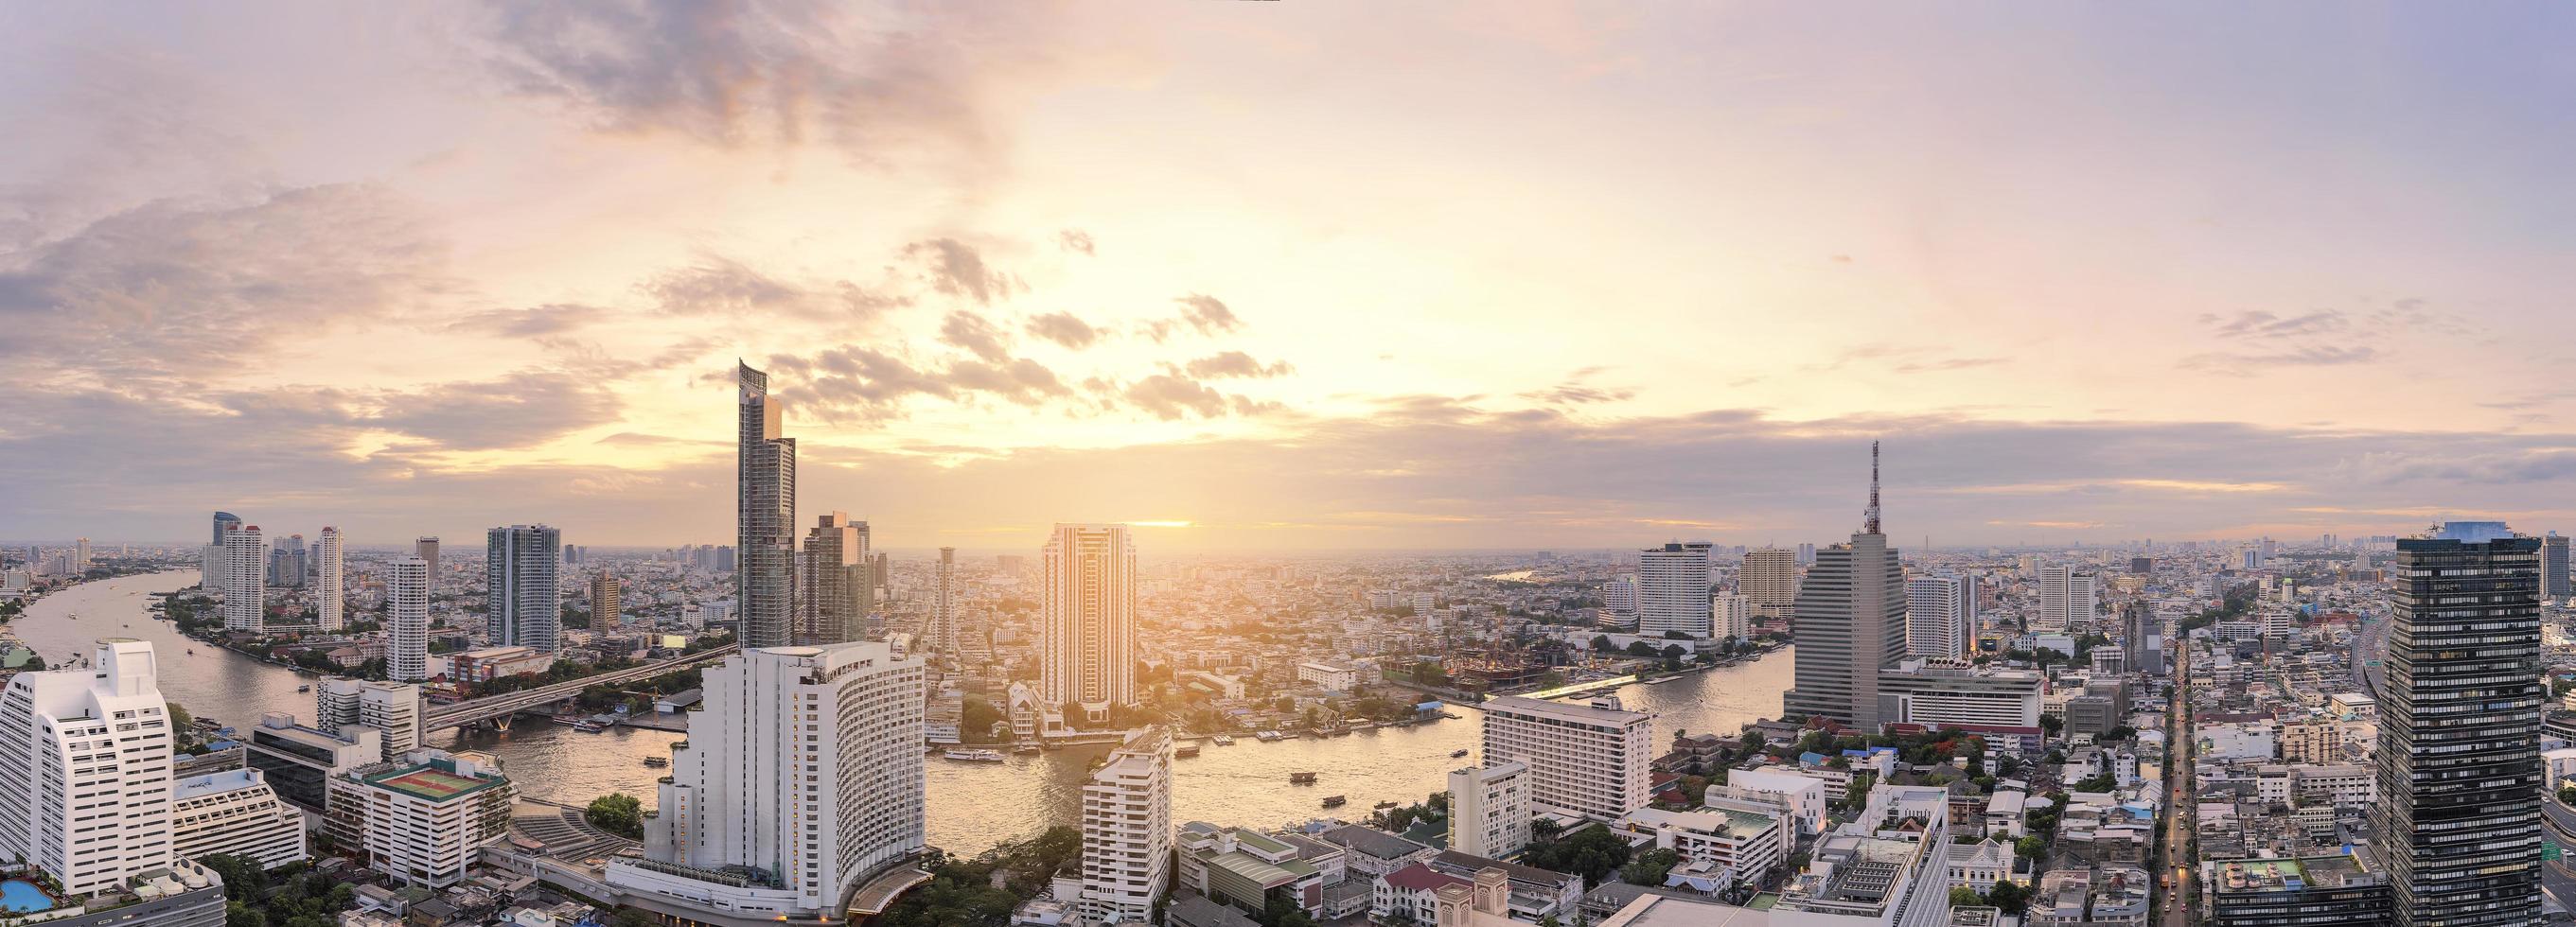 panorama do horizonte de bangkok foto